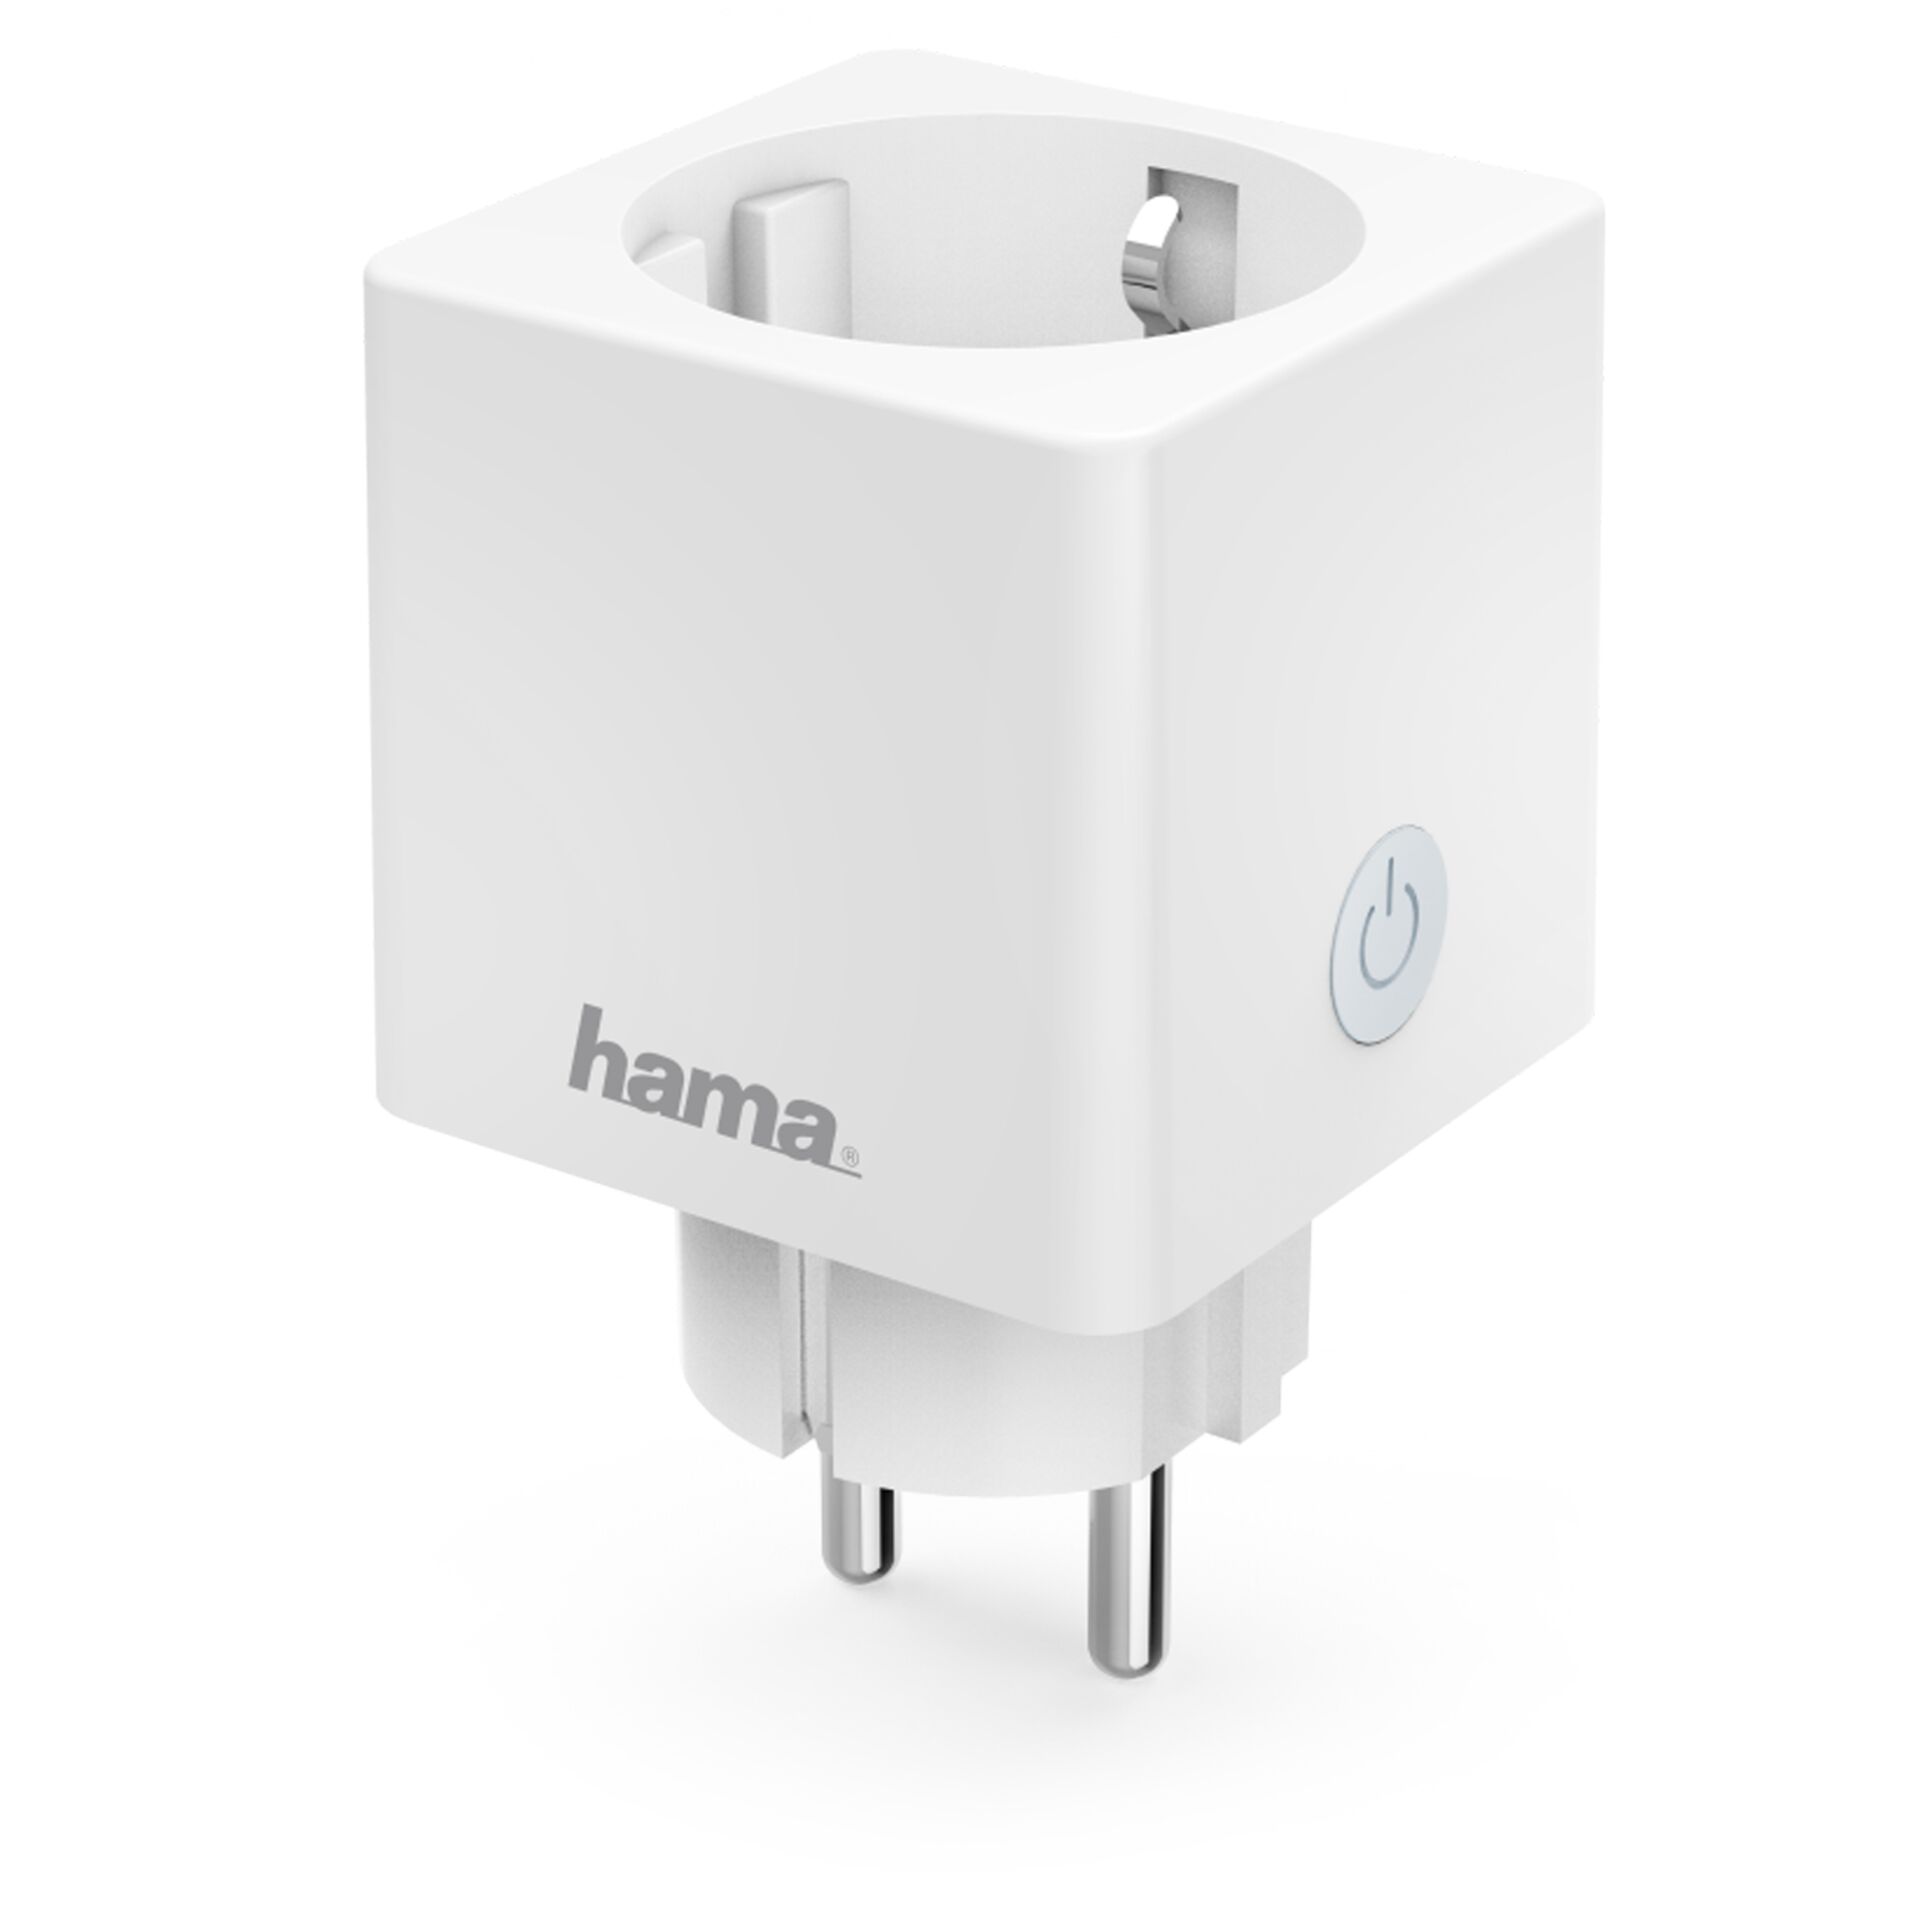 Hama WLAN-Steckdose Mini Verbrauchsmessung, ohne Hub